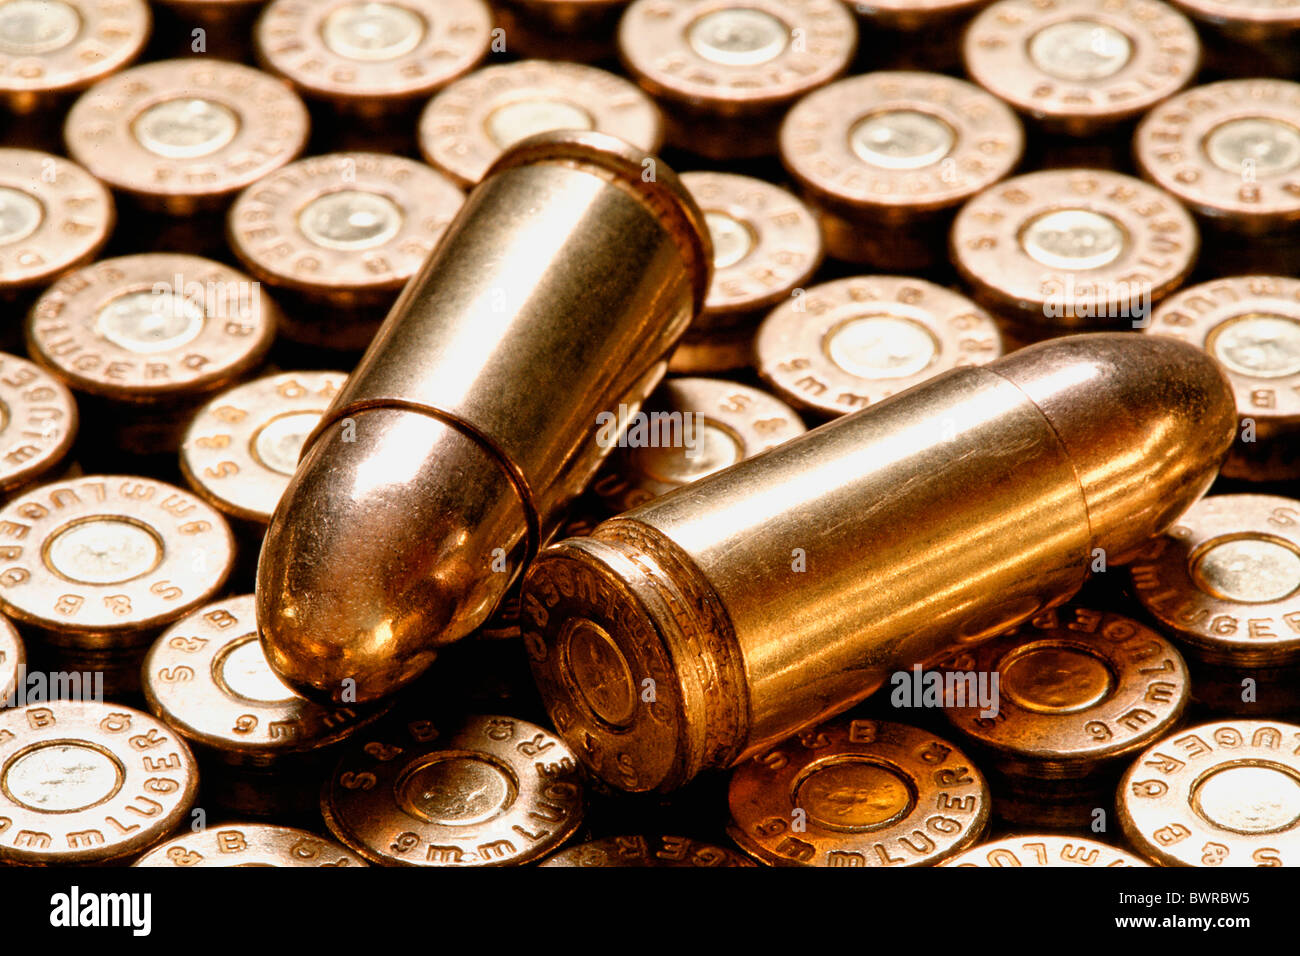 Abundance Aggression Ammunition Brass Bullet Bullets Caliber Close-up Concept Crime Danger Detail Enforcem Stock Photo